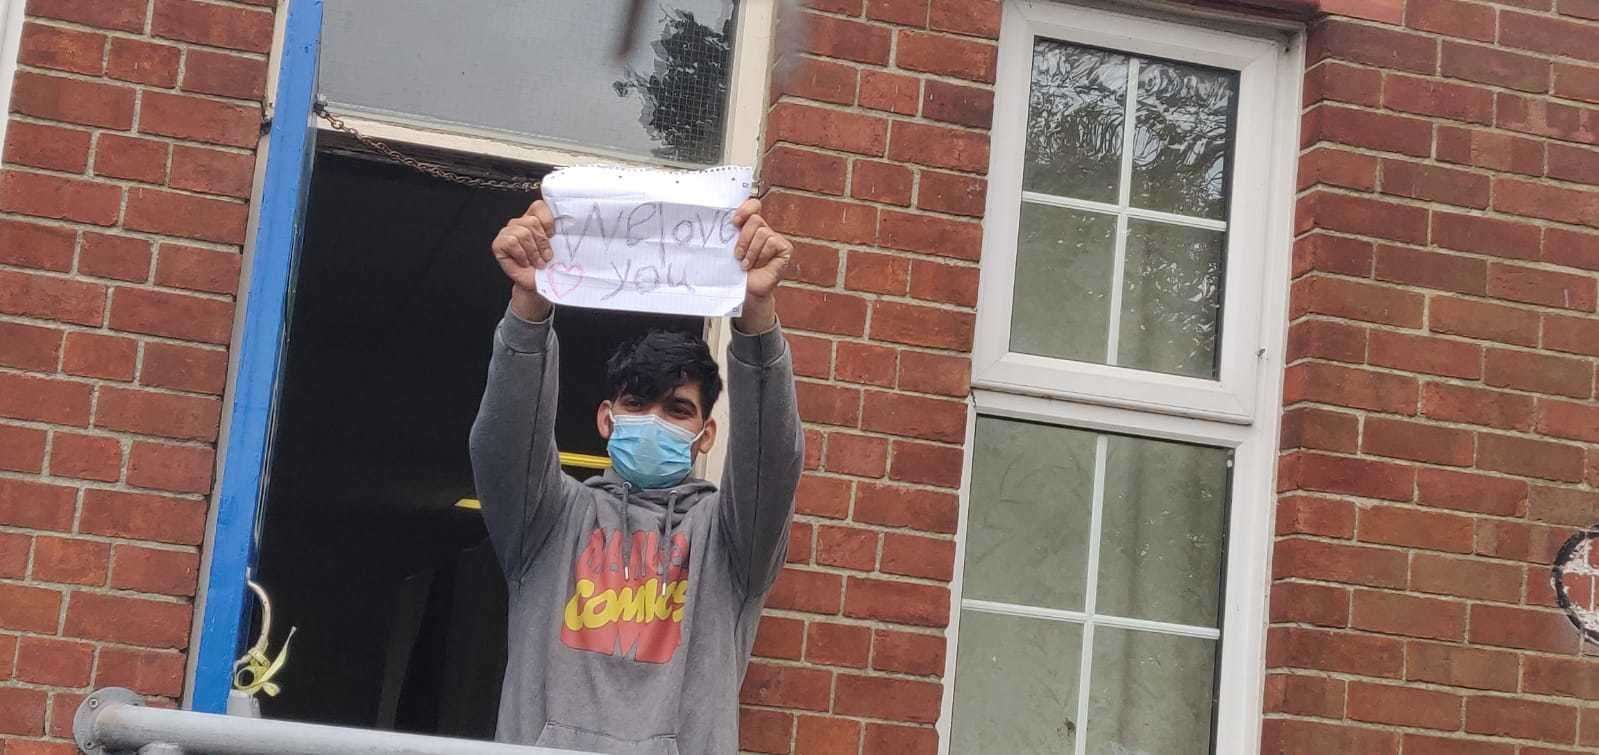 A refugee holds up a sign at Napier Barracks